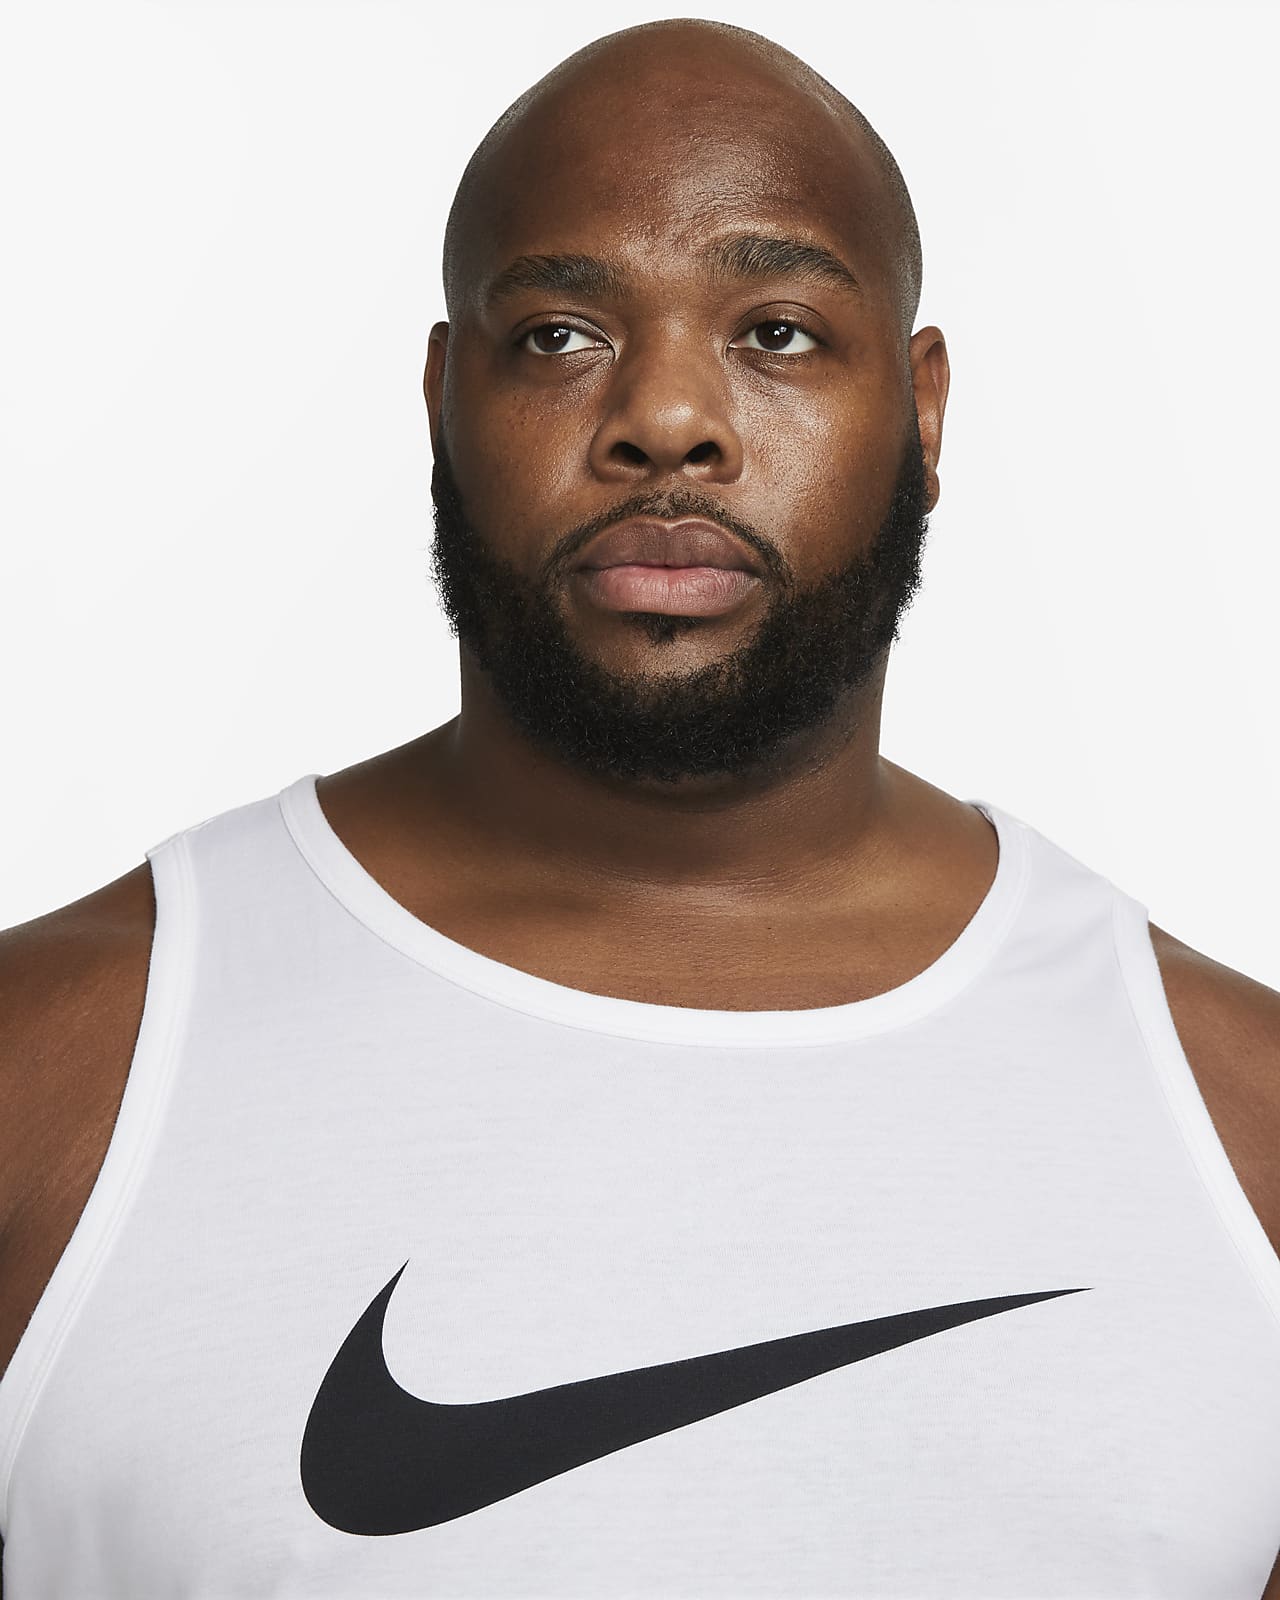  Men's Athletic Shirts & Tees - Nike / Sleeveless